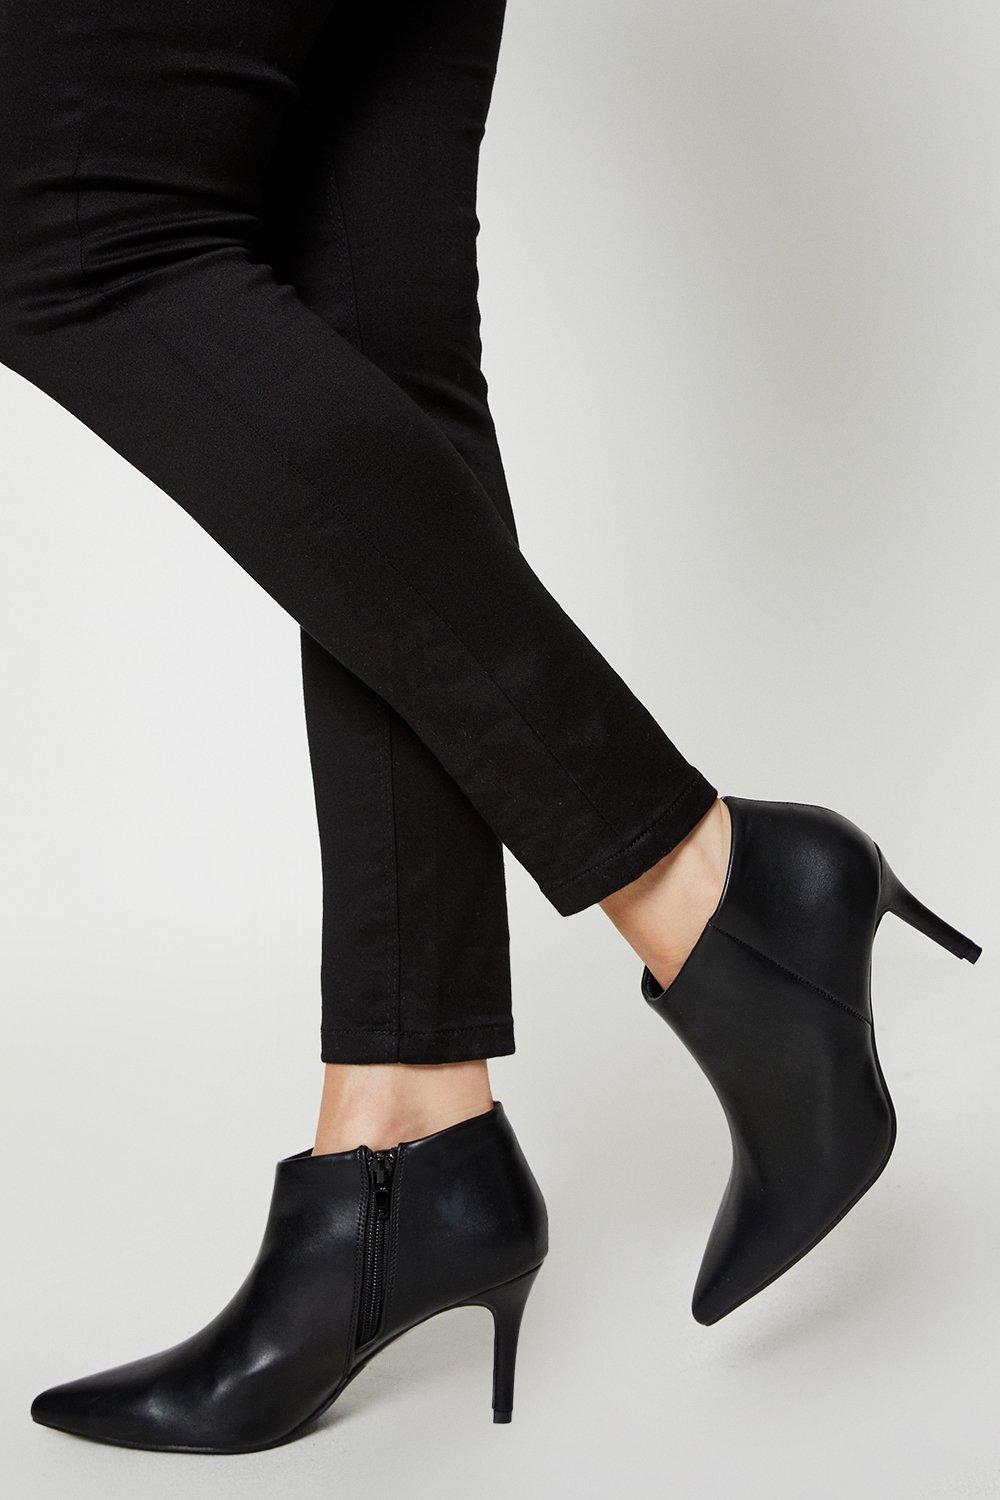 Women’s Principles: Odette Pointed Stiletto Heel Shoe Boots - black - 8